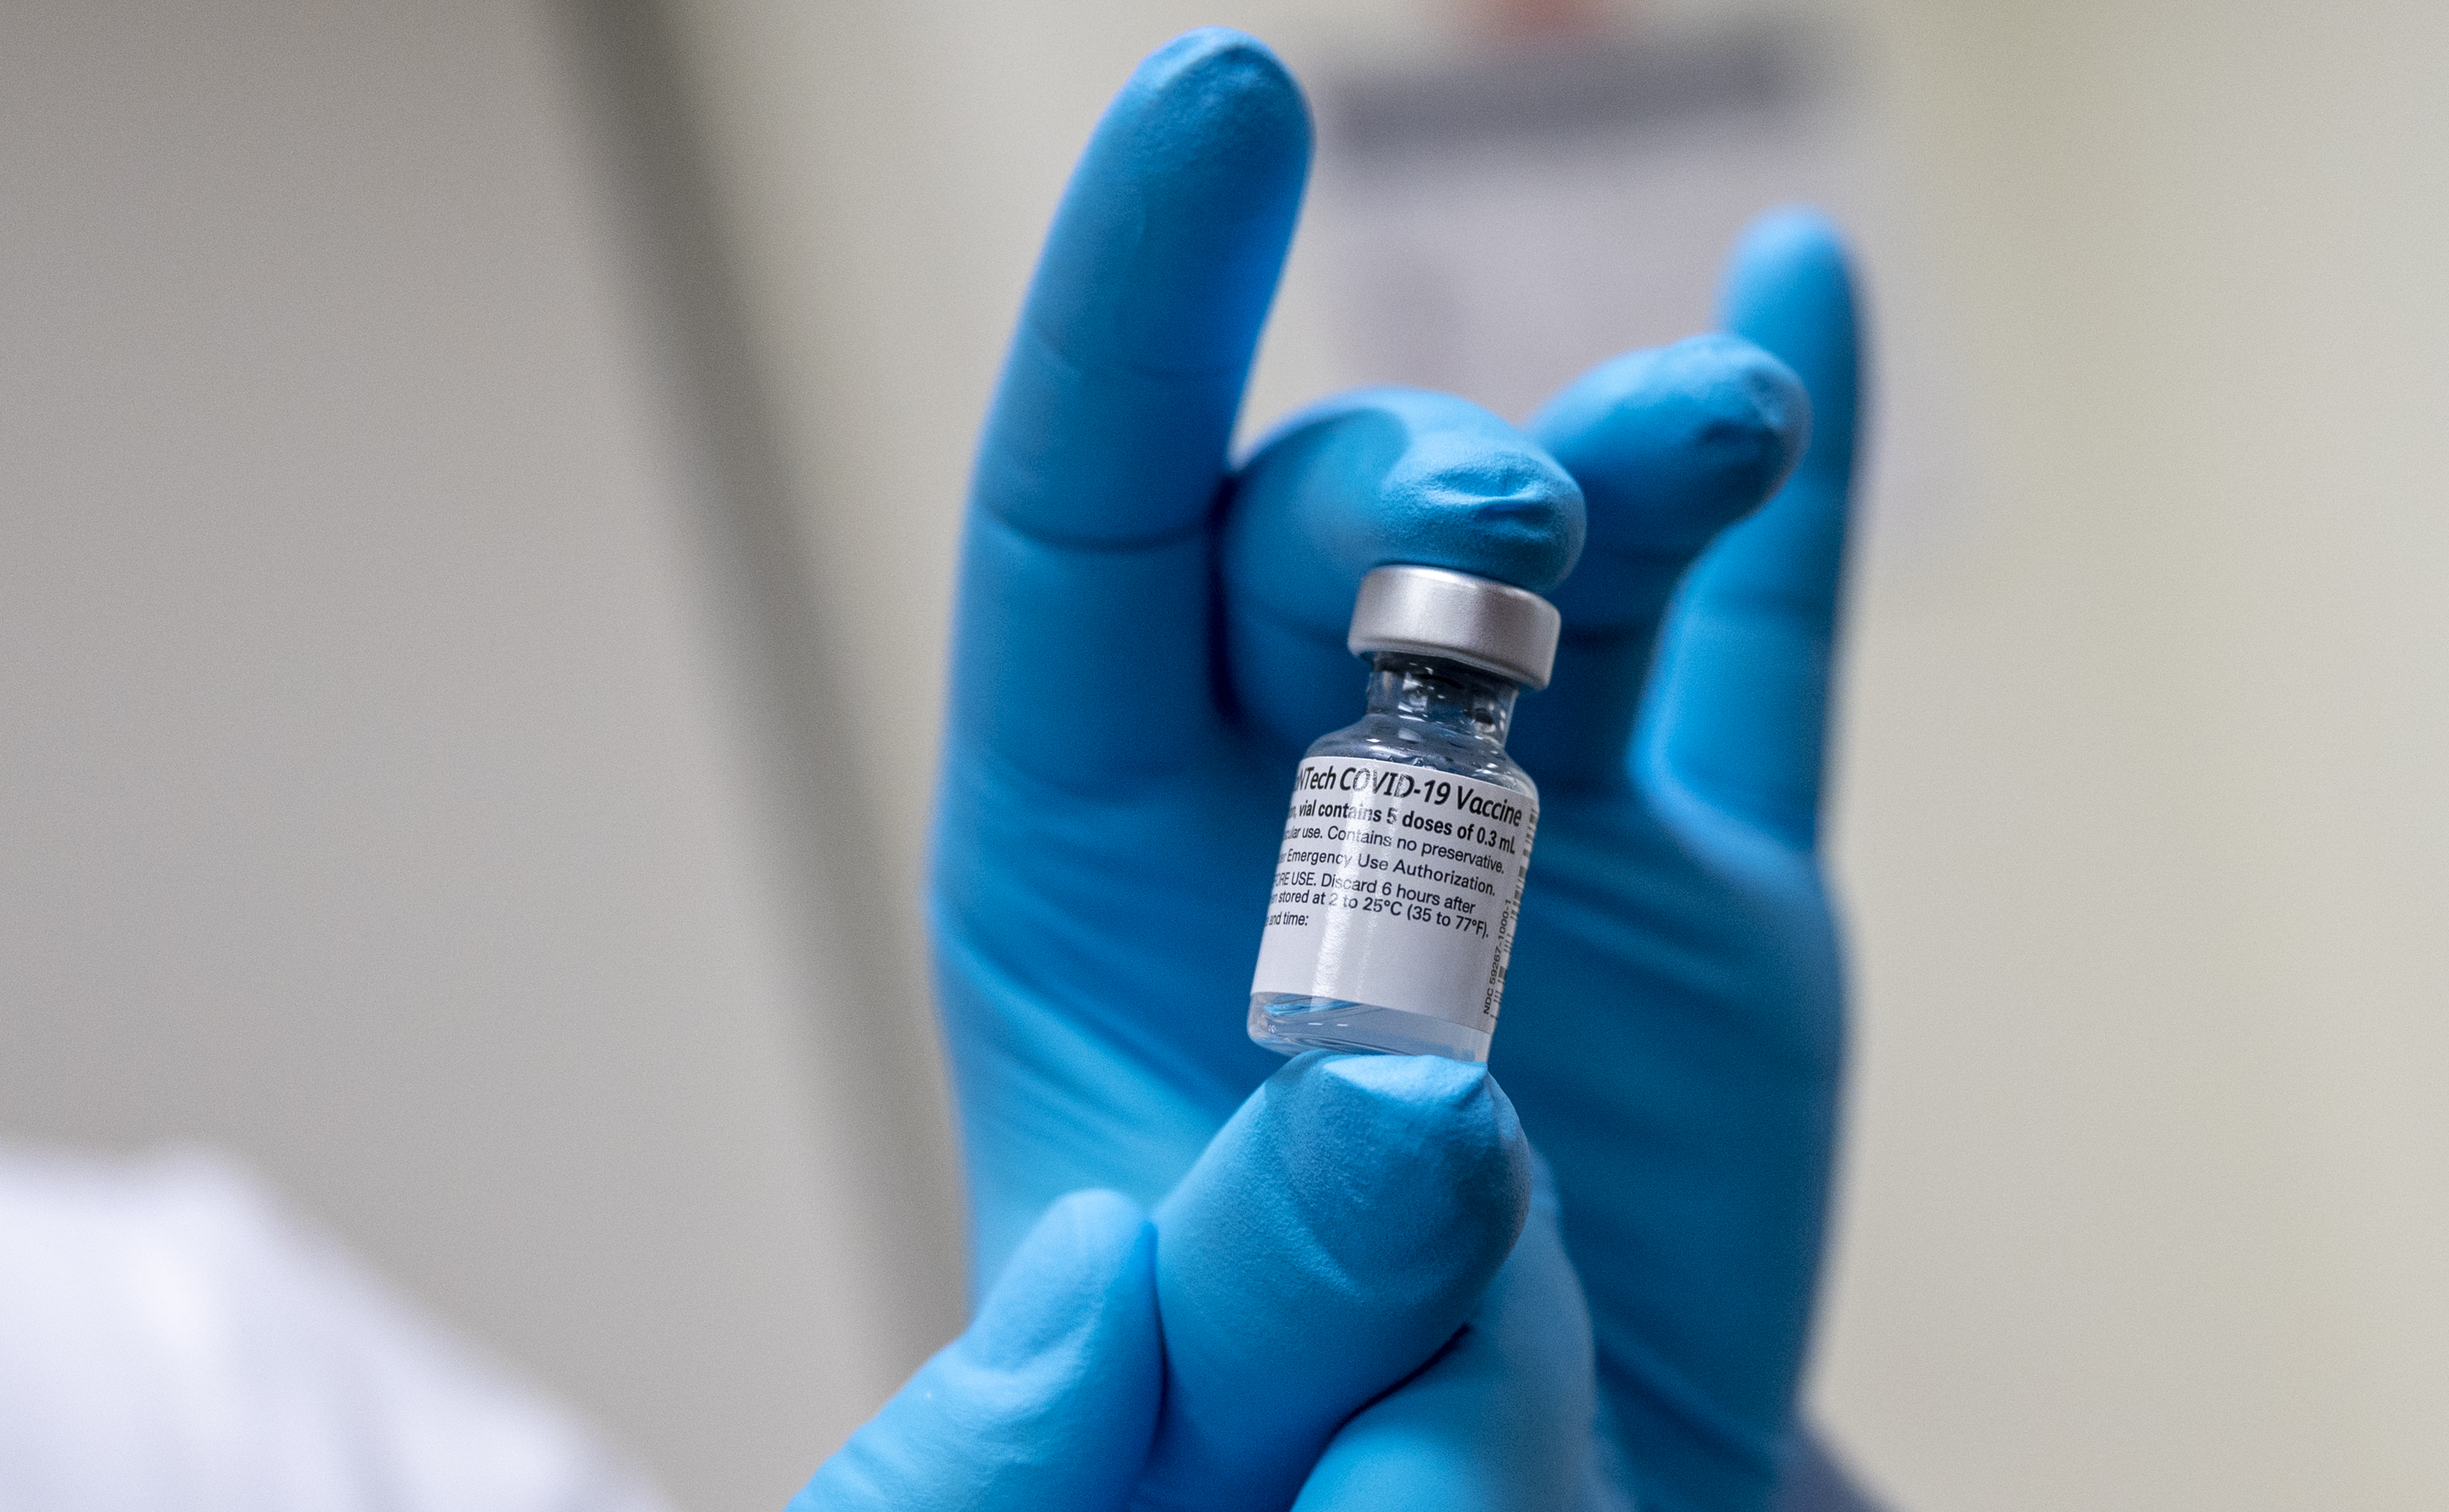 New Moderna vaccine arrives in Australia